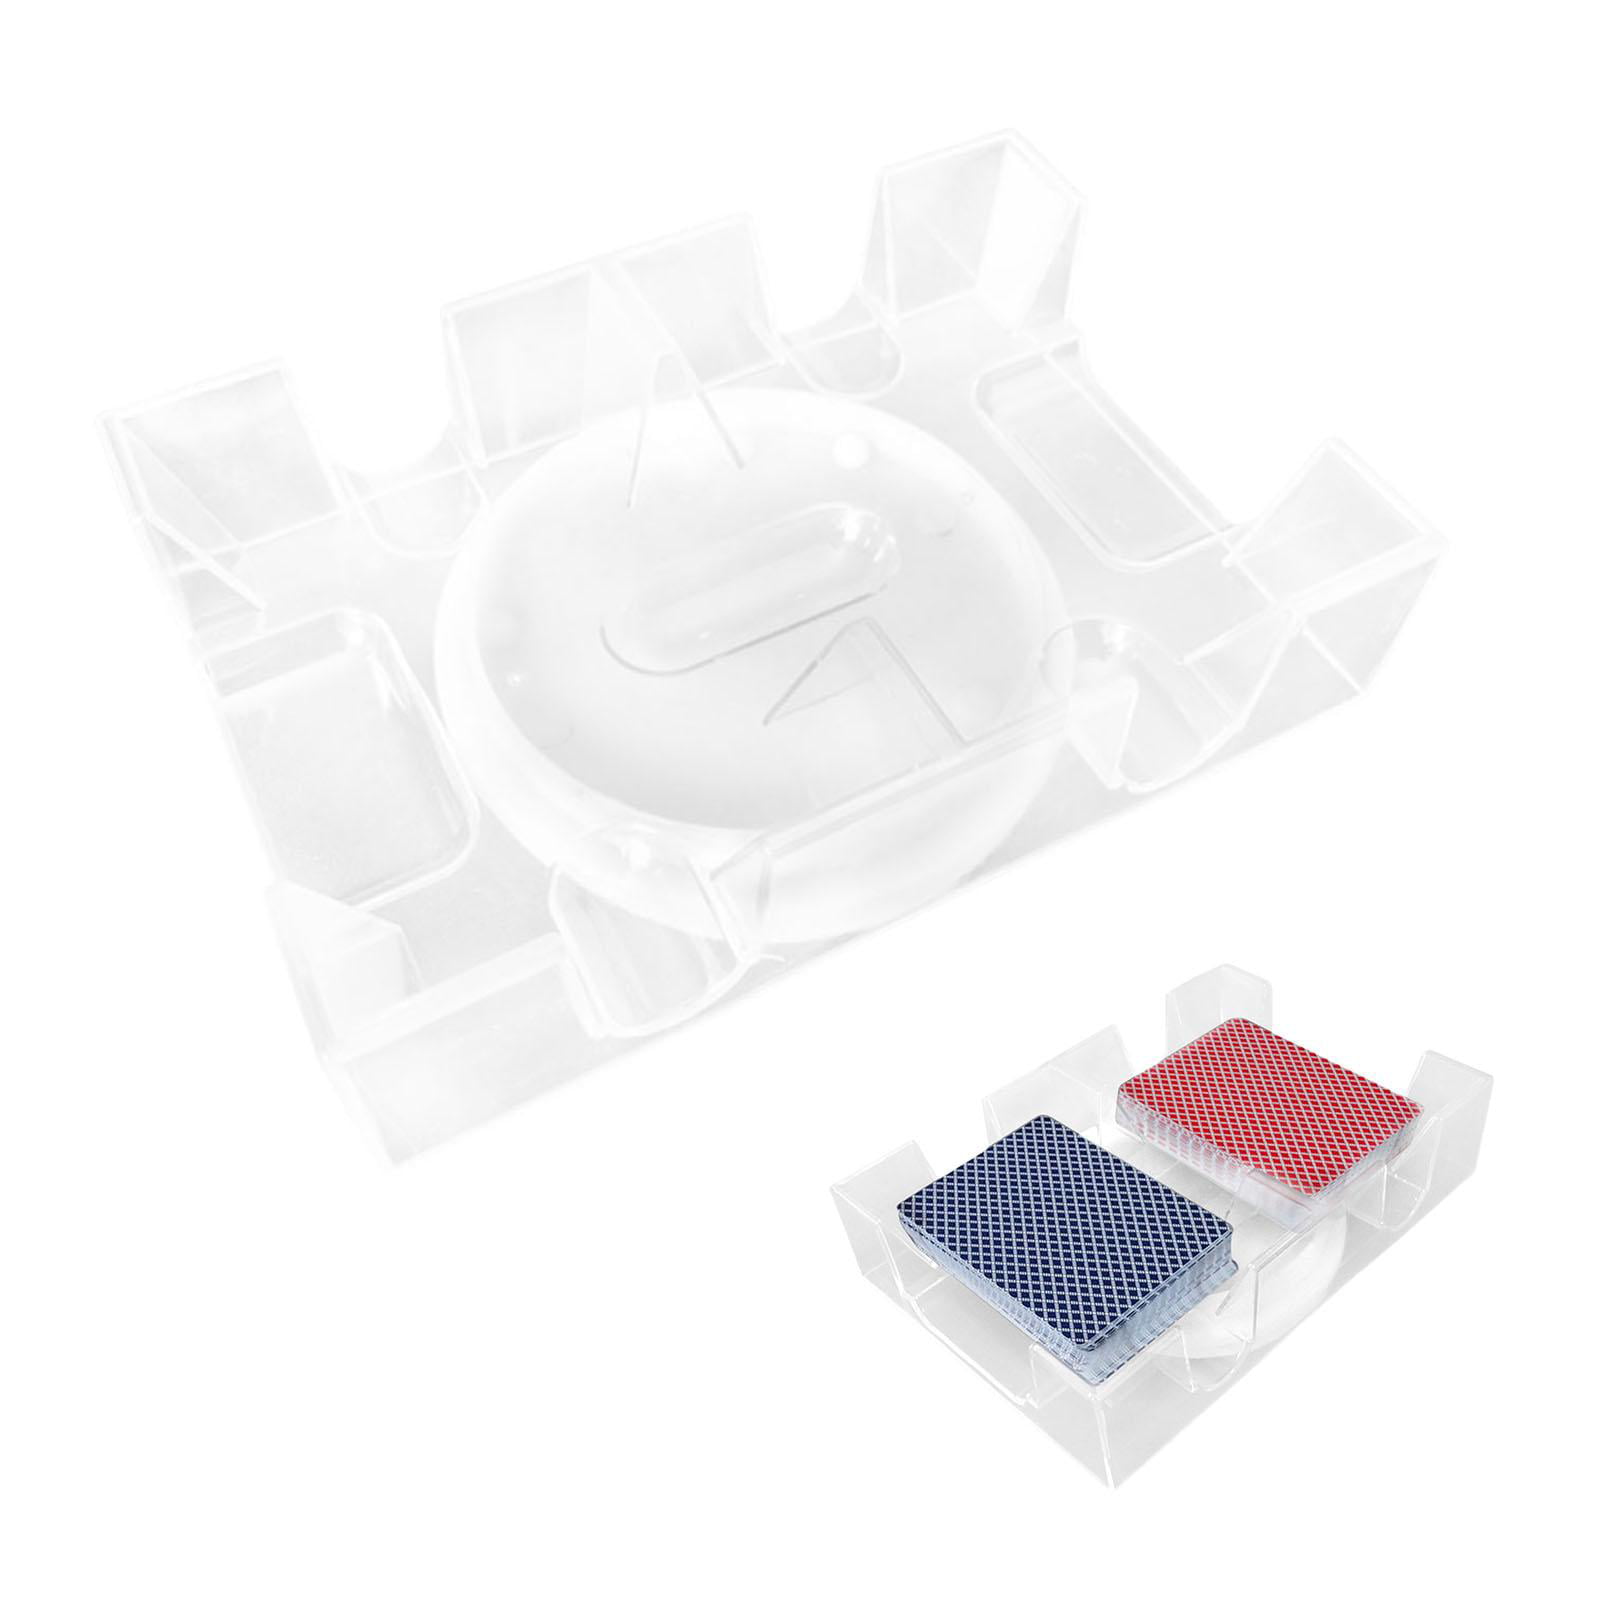 9 Decks Revolving Card Holder Toy Clear Plastic Playing Tray 9 Decks Capacity 